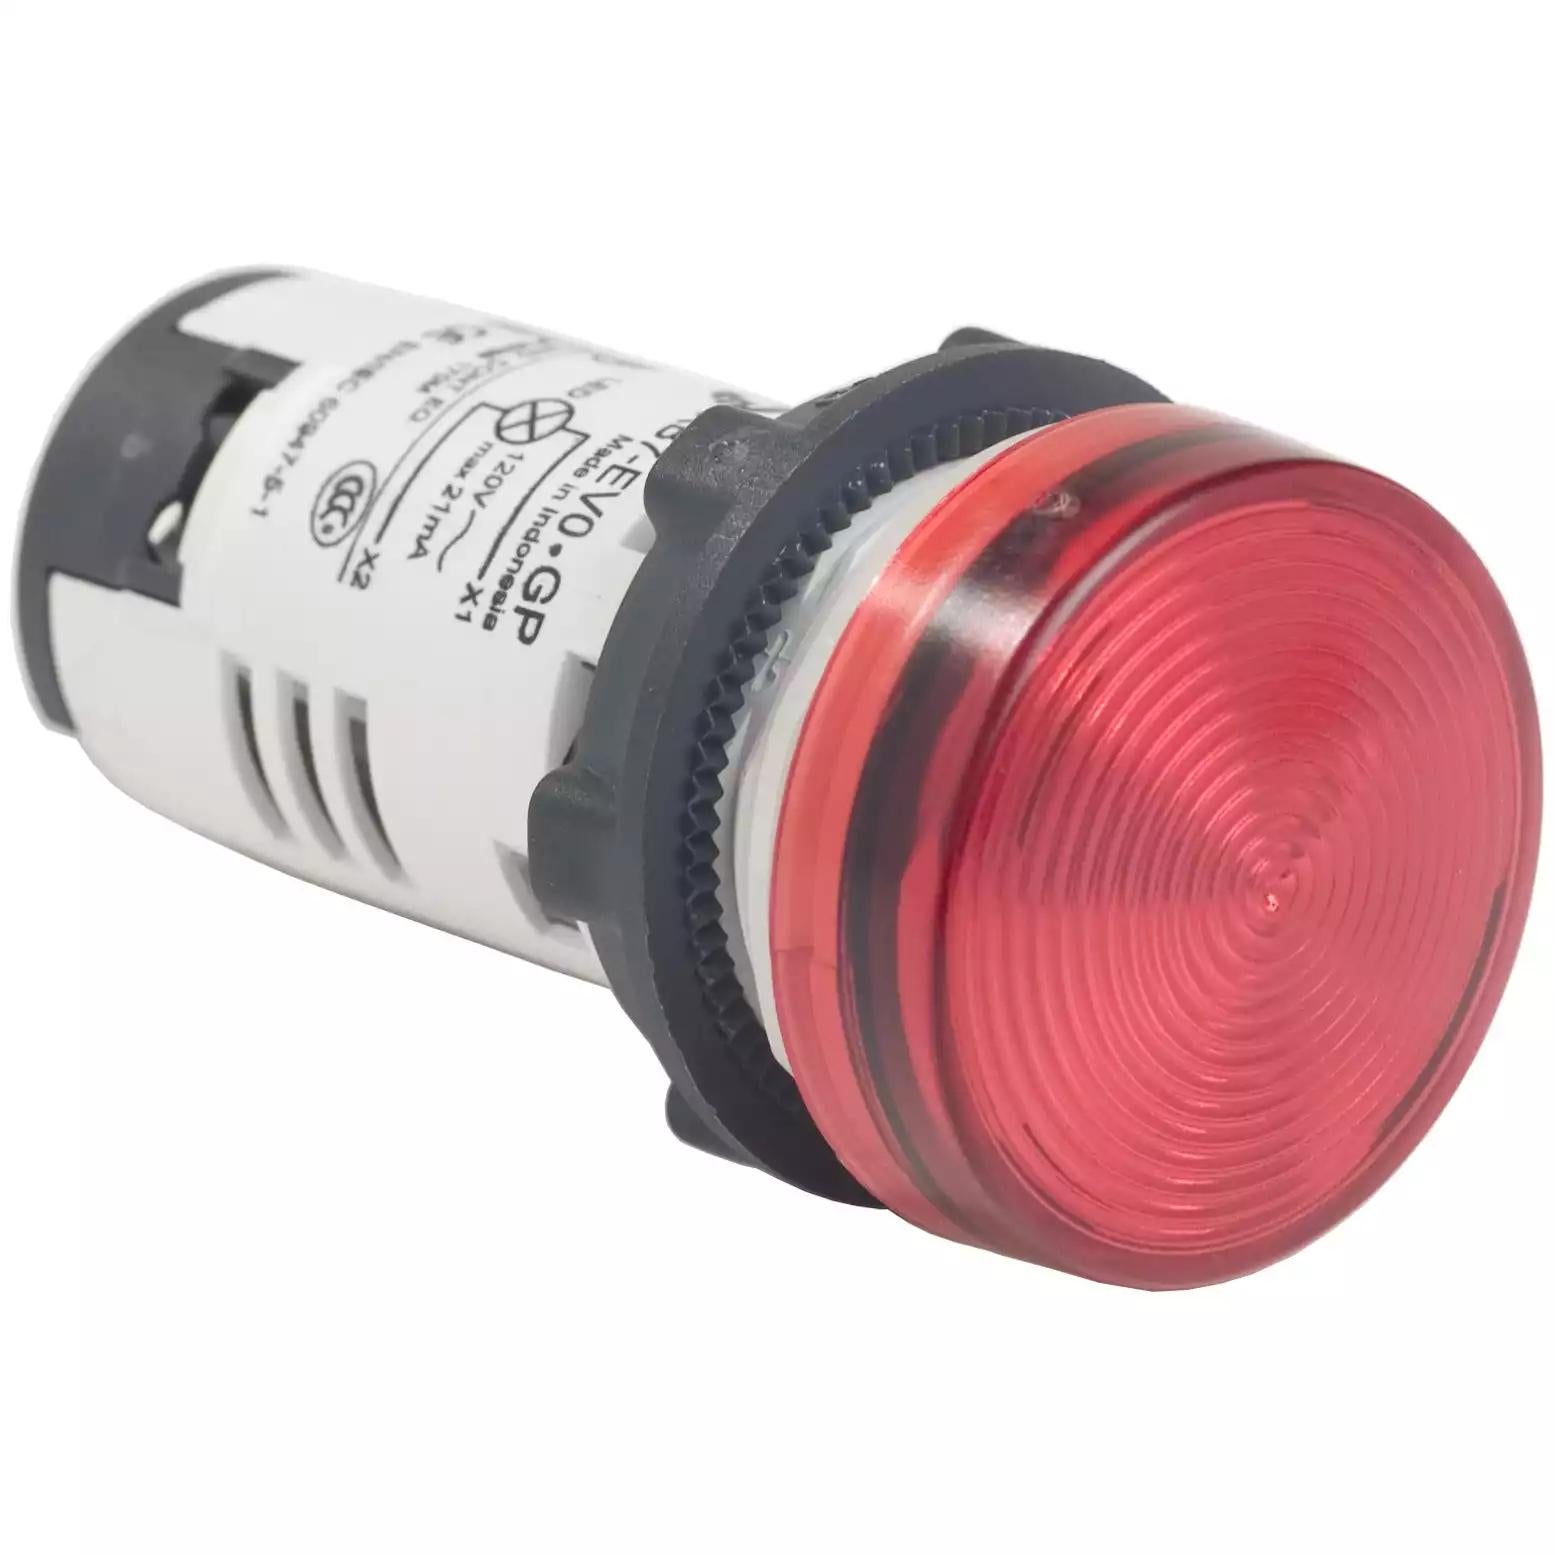 Monolithic pilot light, Harmony XB7, plastic, red, 22mm, integral LED, 110...120V AC